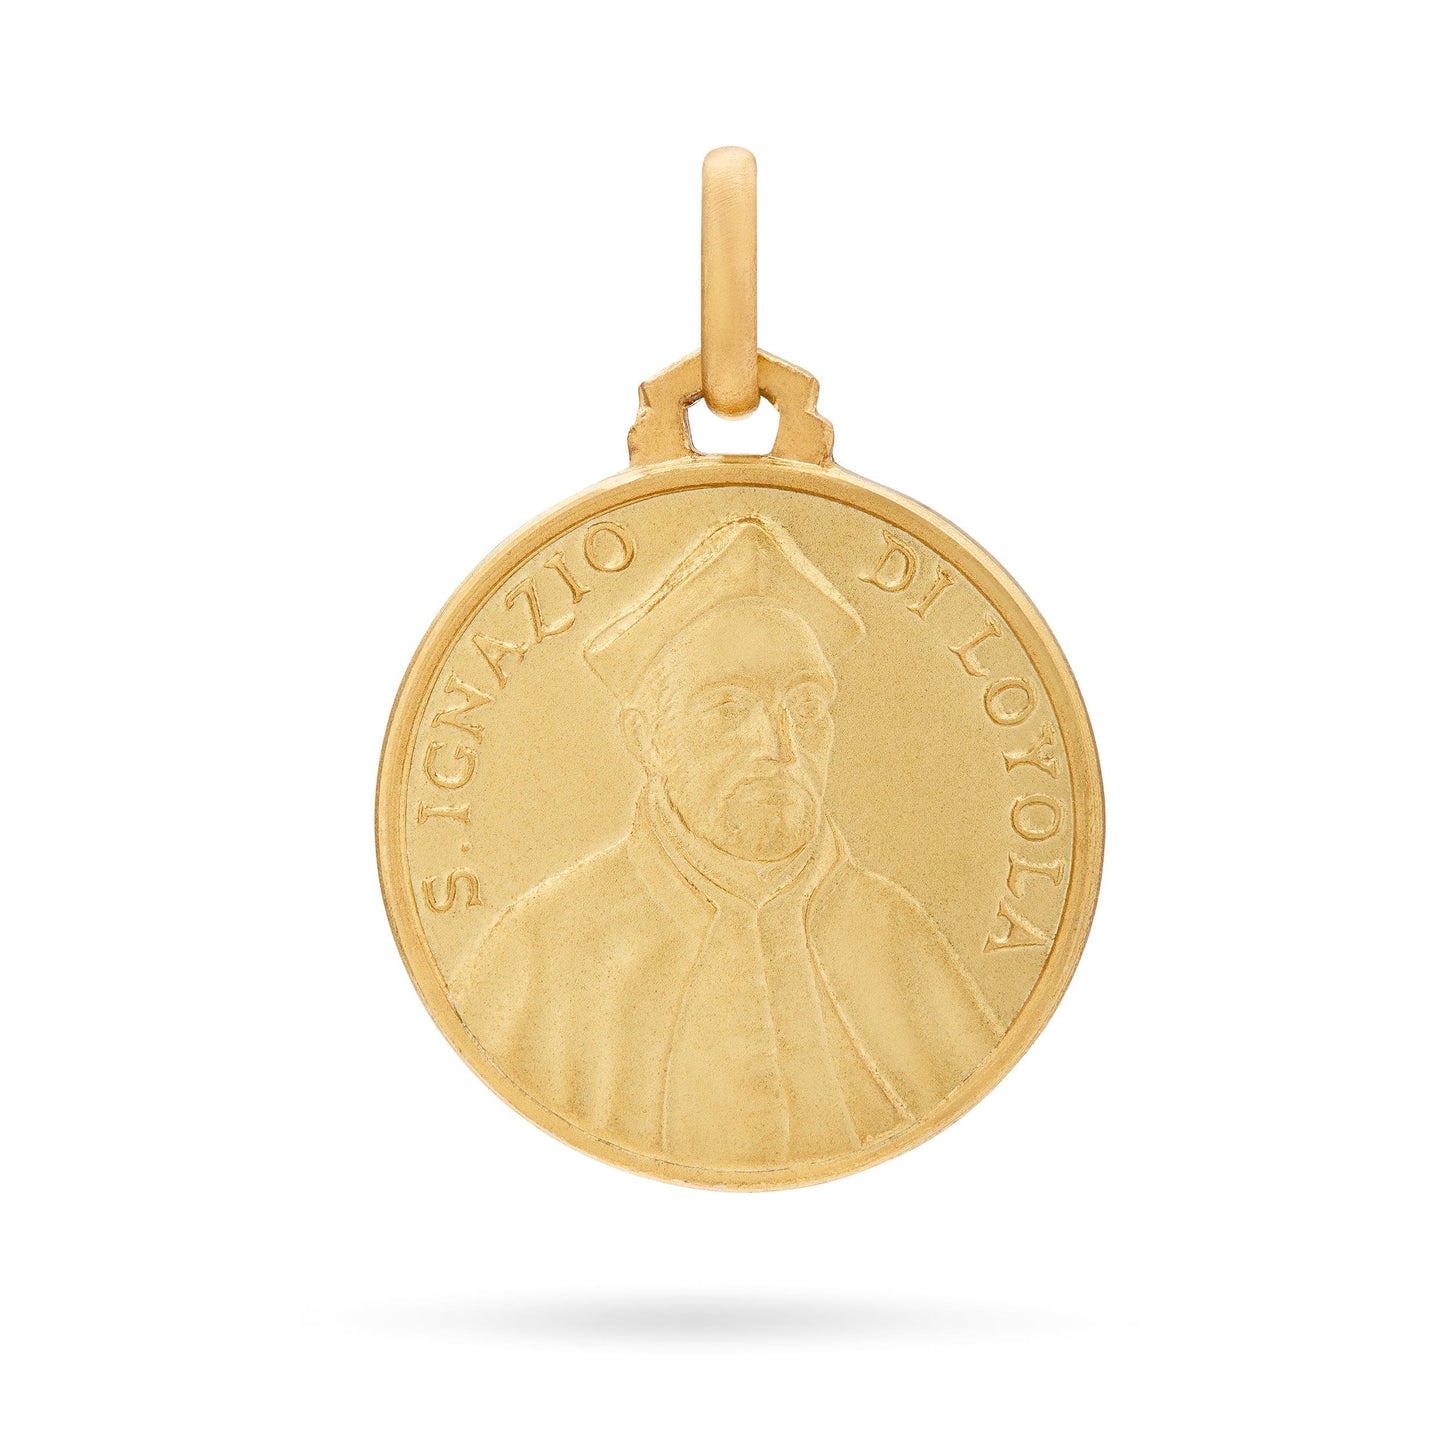 MONDO CATTOLICO Jewelry 18 mm (0.70 in) Gold medal of Saint Ignatius of Loyola